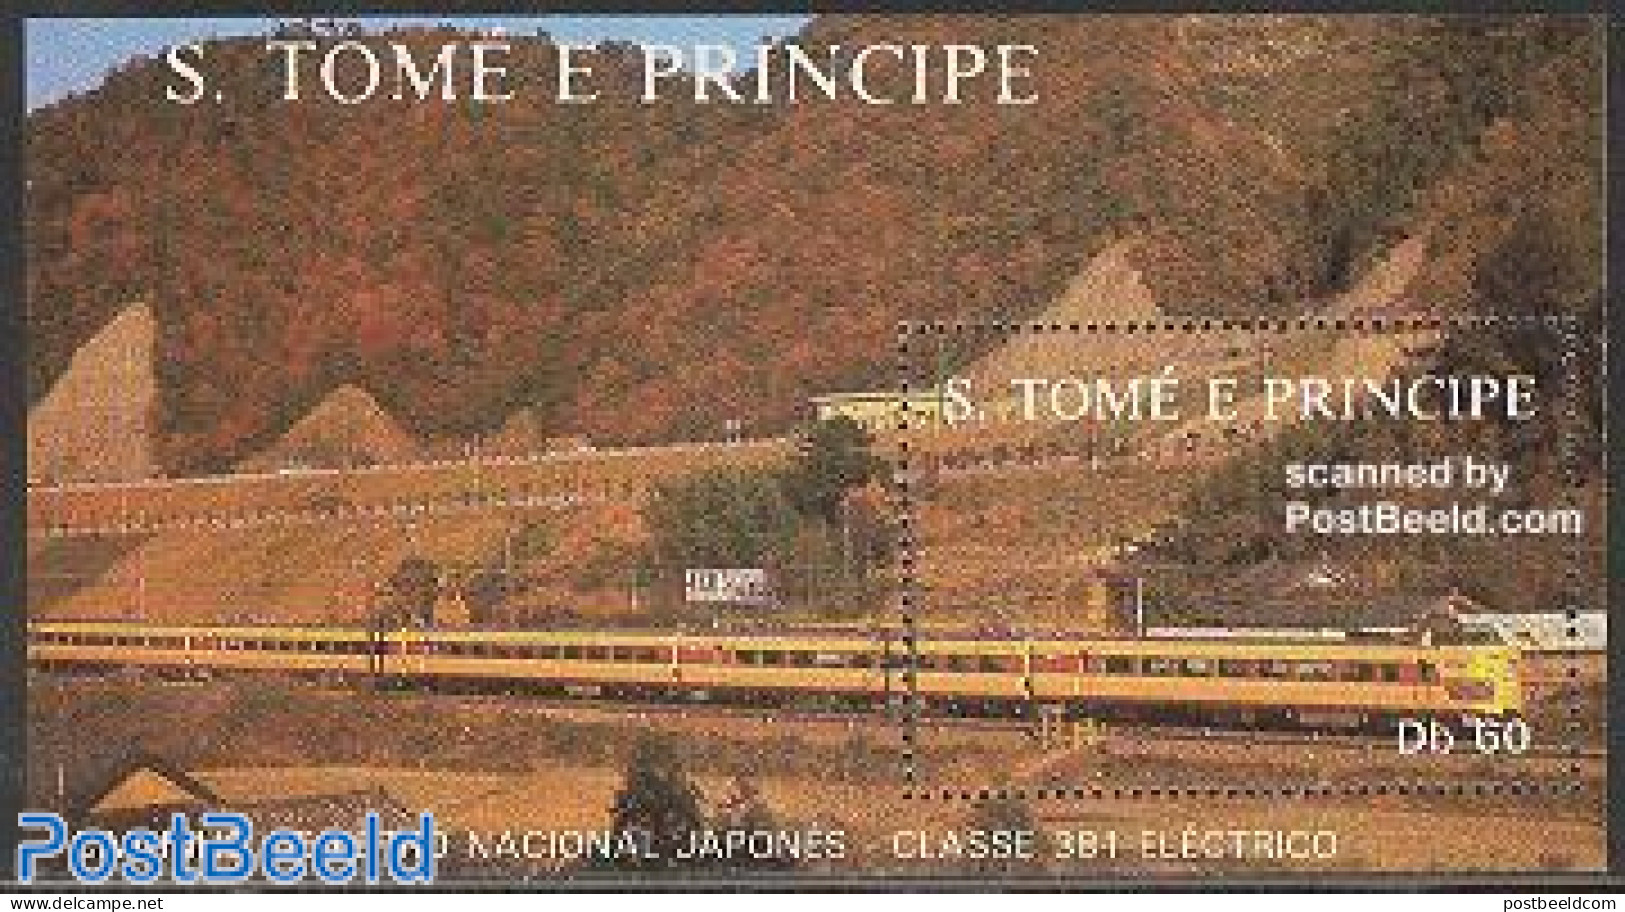 Sao Tome/Principe 1988 Electric Locomotive, Japan S/s, Mint NH, Transport - Railways - Trains